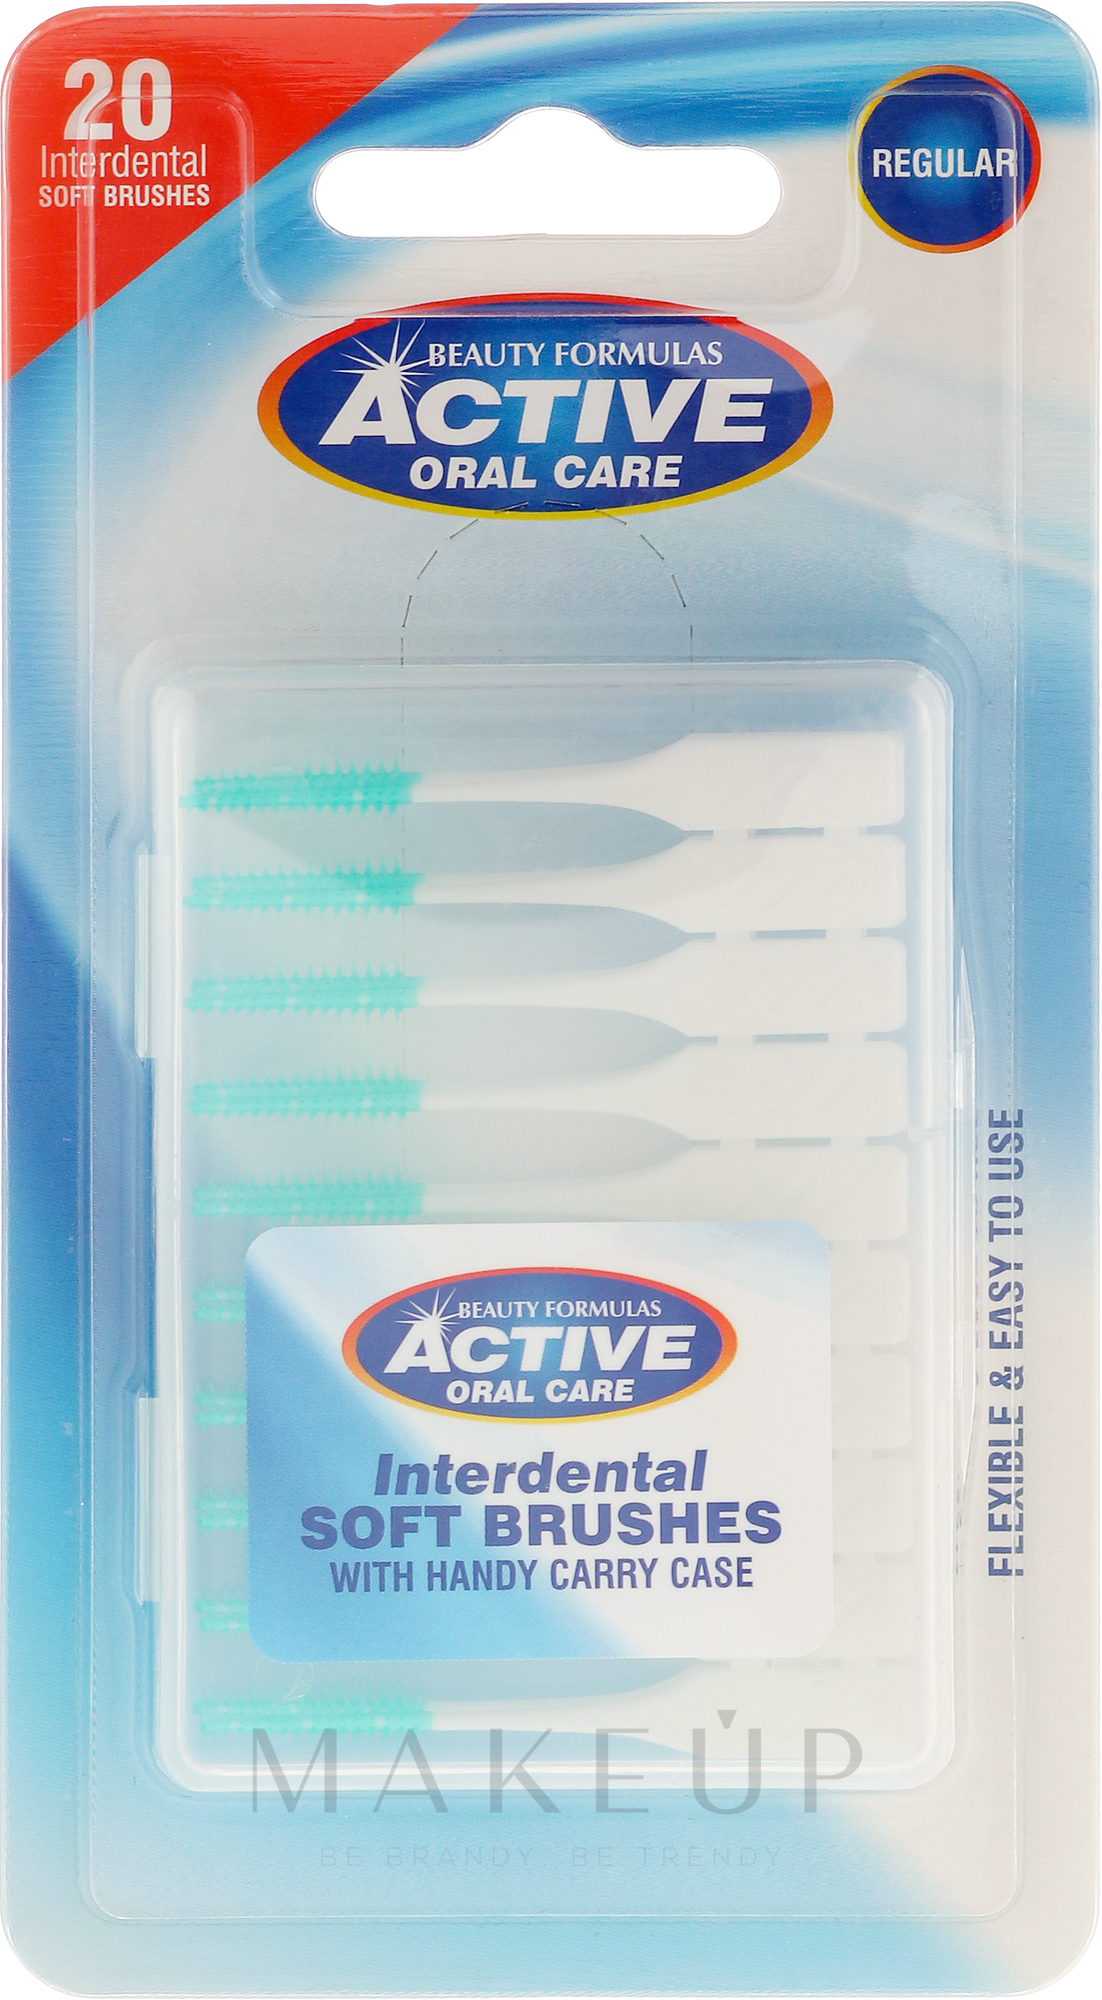 Interdentalzahnbürsten Regular grün 20 St. - Beauty Formulas Active Oral Care Interdental Soft Brushes Regular — Foto 20 St.